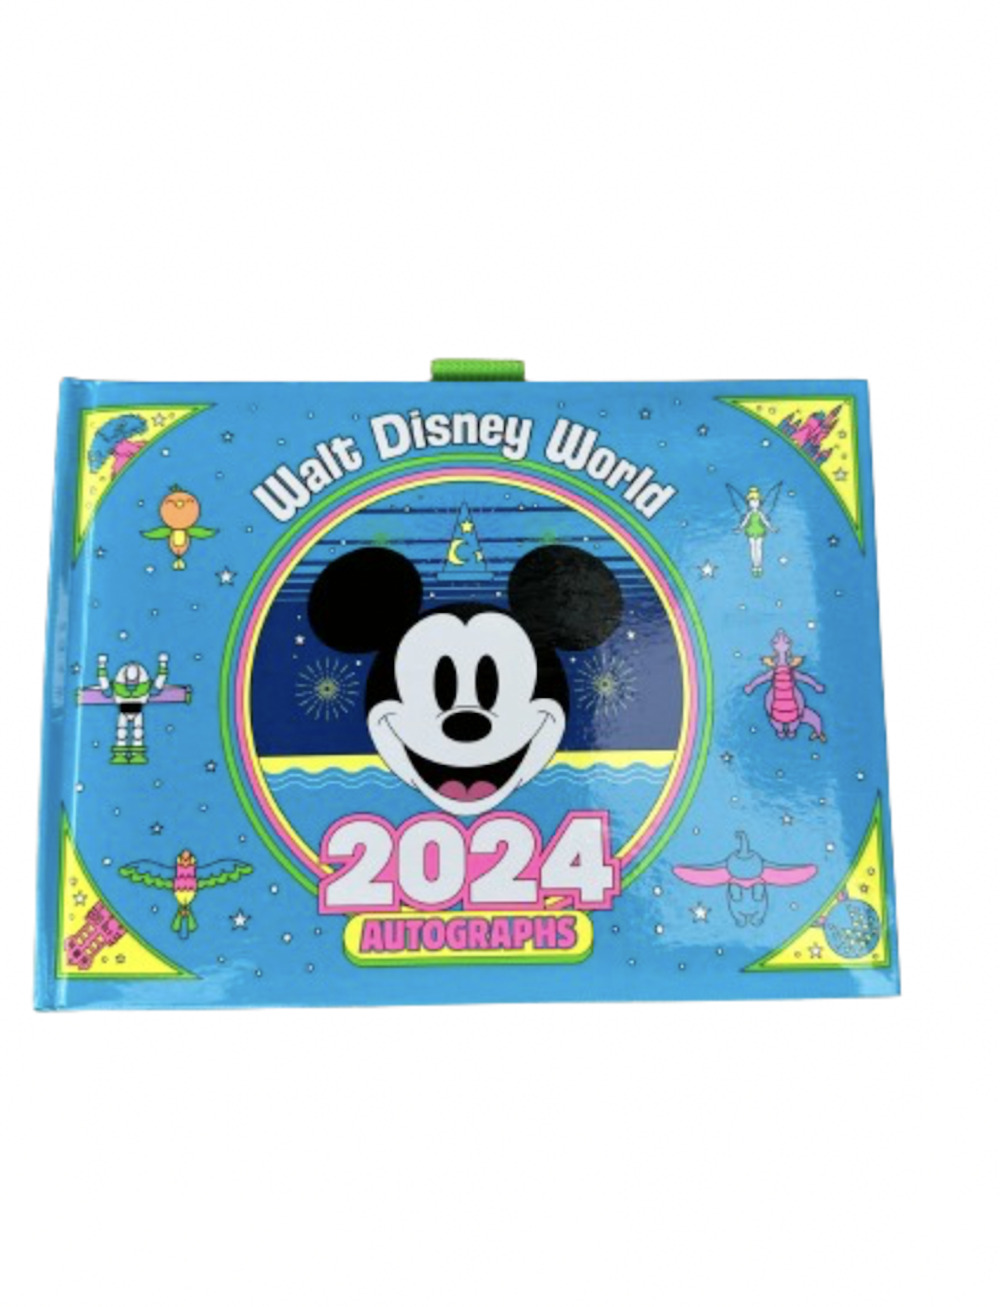 Disney Parks Walt Disney World 2024 Mickey Autograph Book New